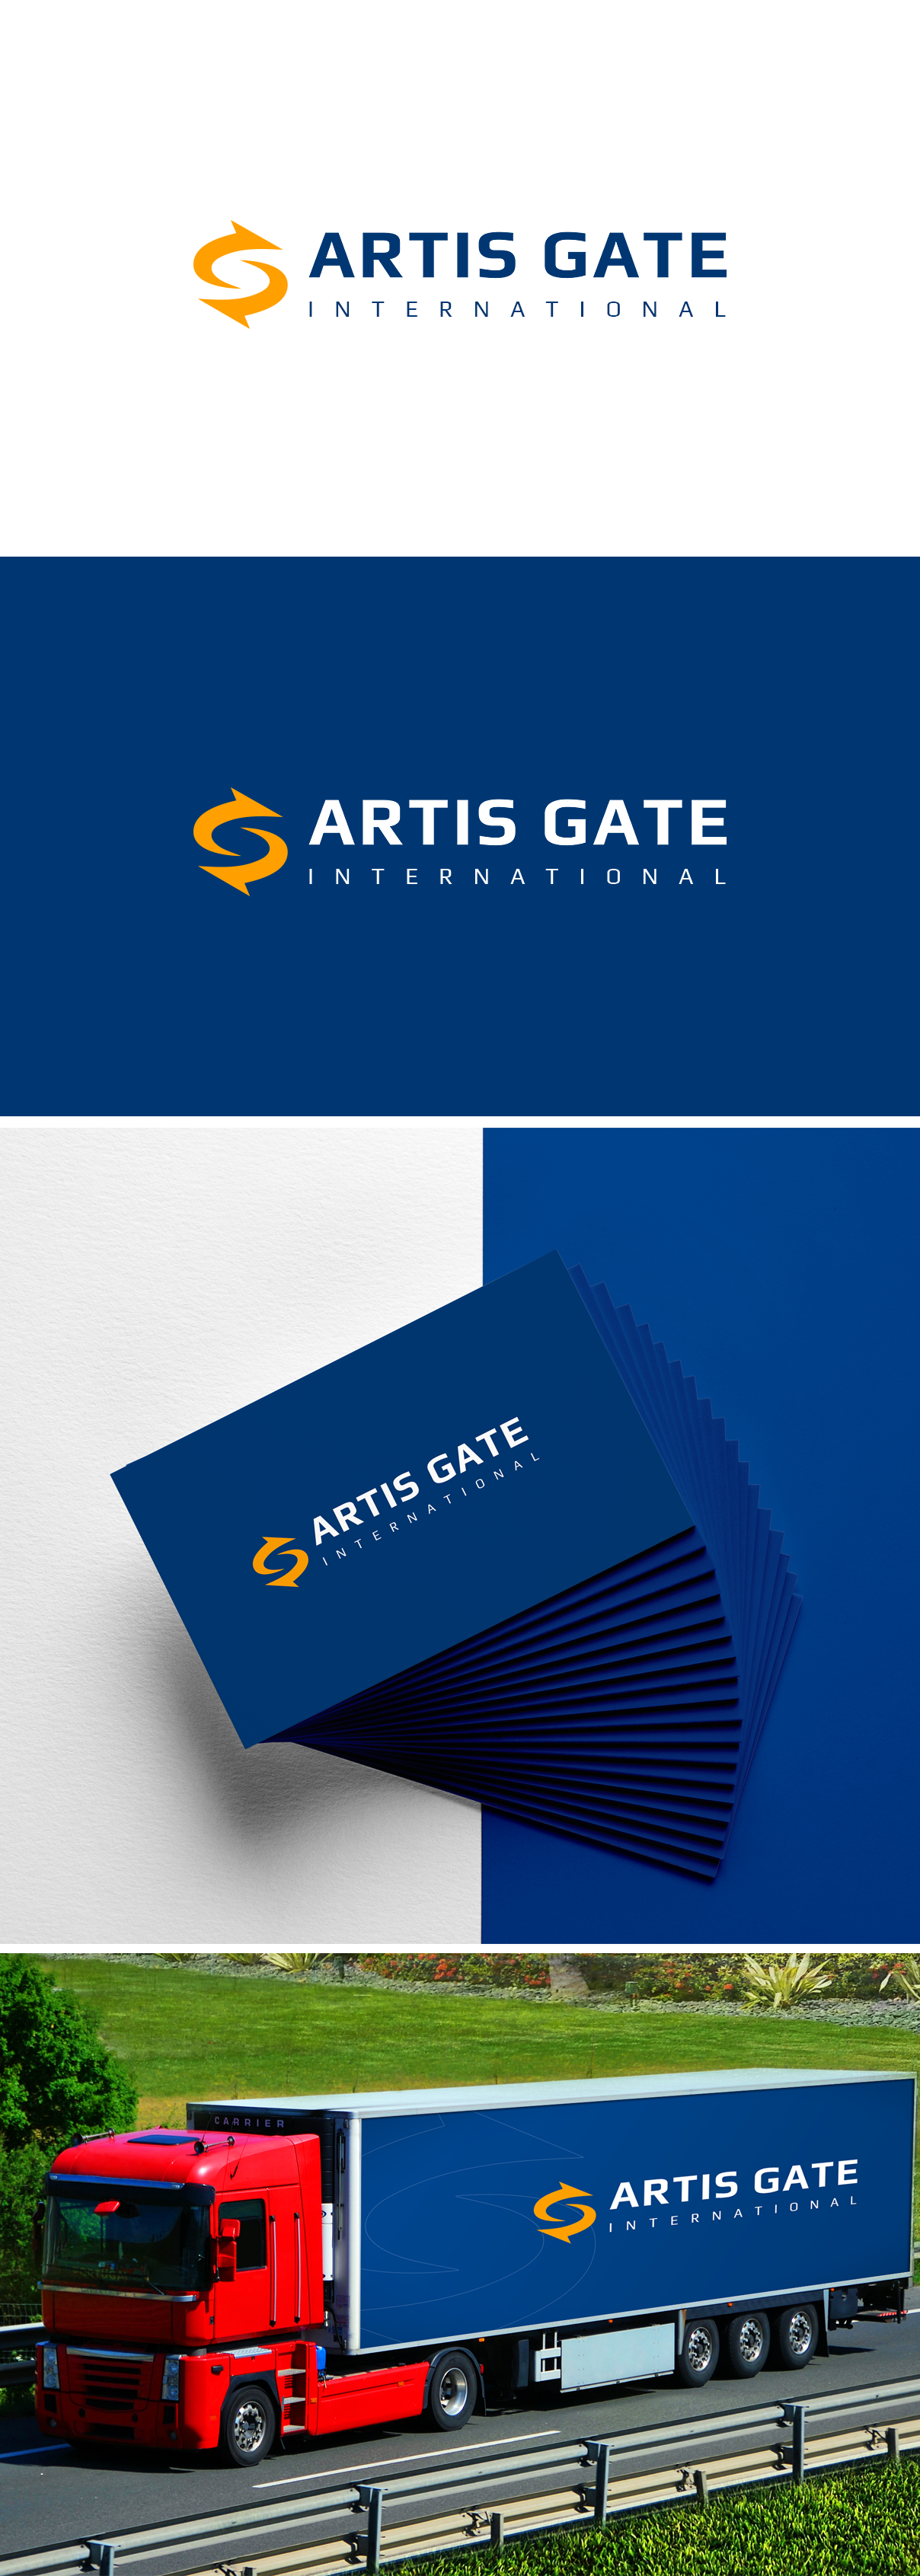 Artis Gate International logo